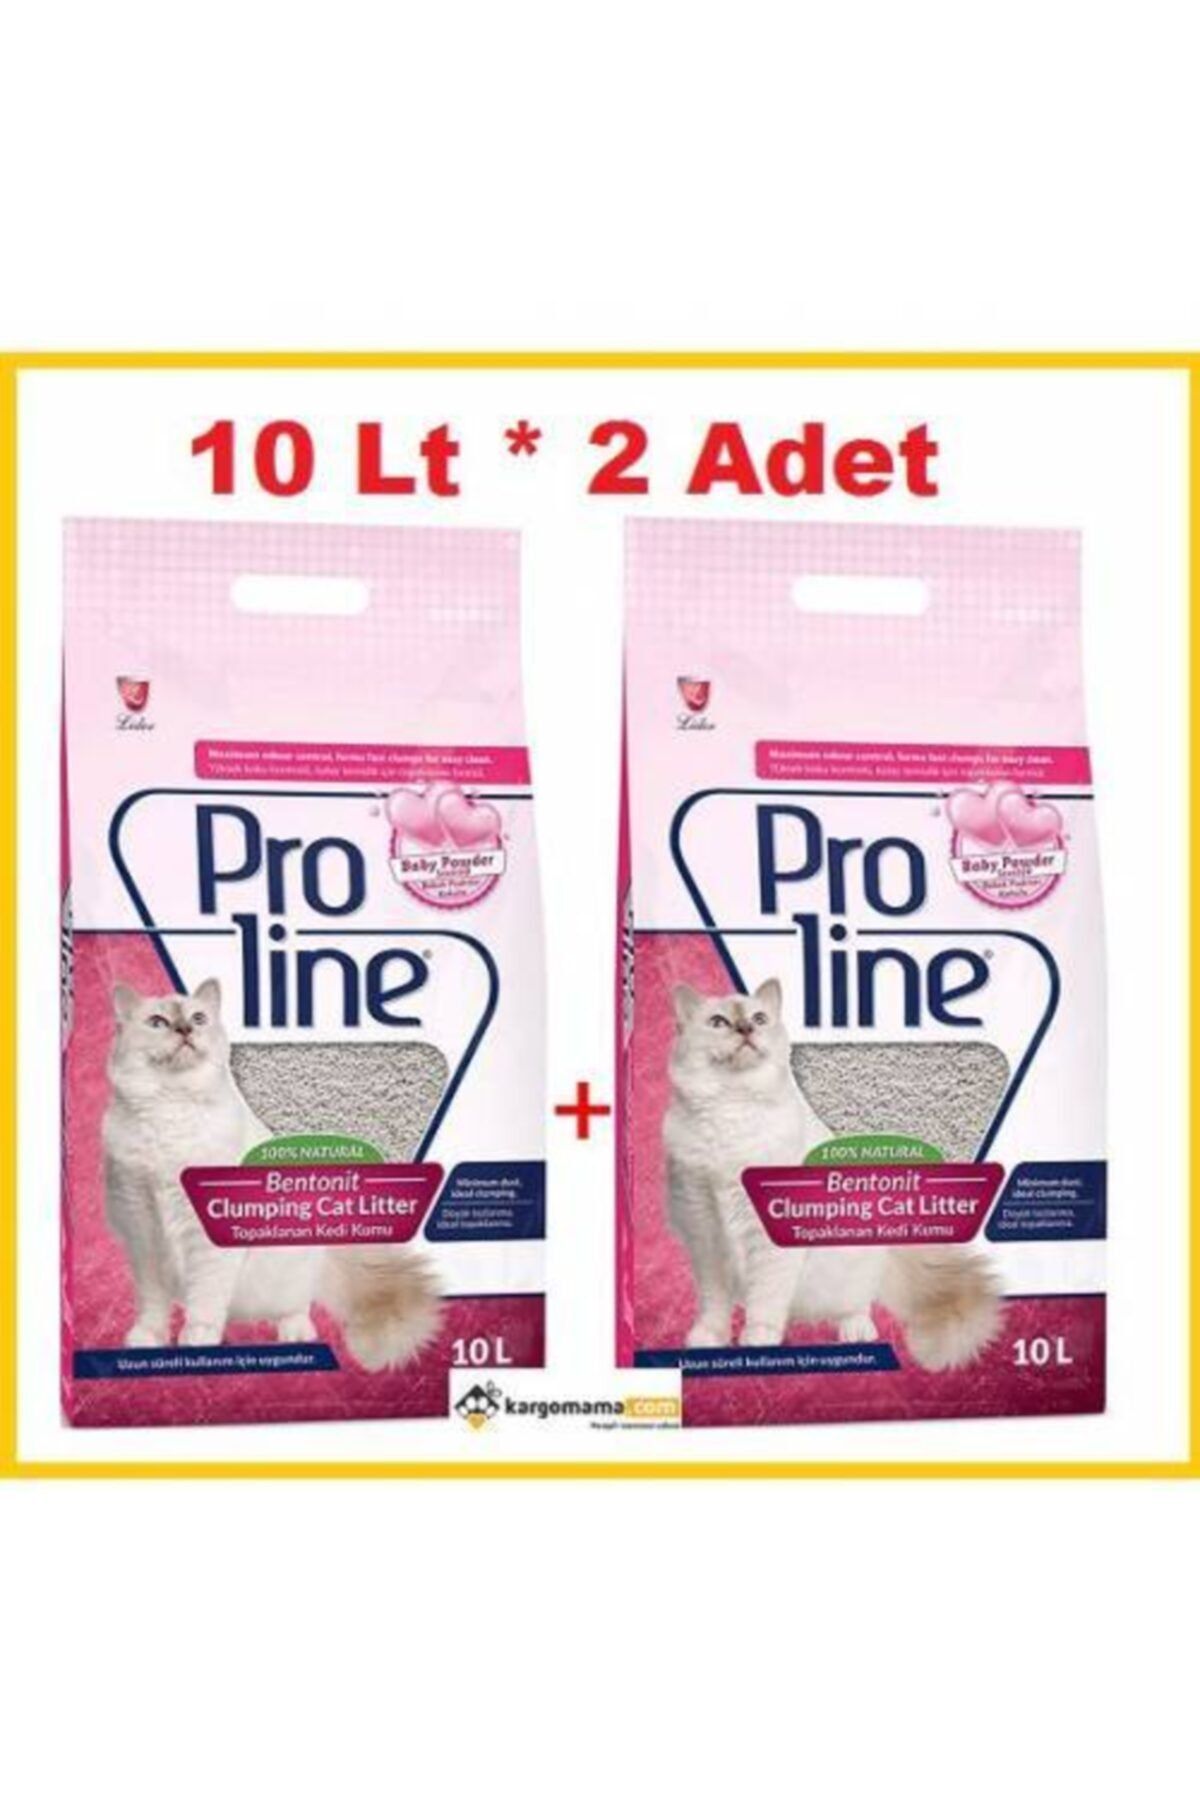 Pro Line Proline Baby Powder Kokulu Ince Tane Topaklanan Kedi Kumu 20